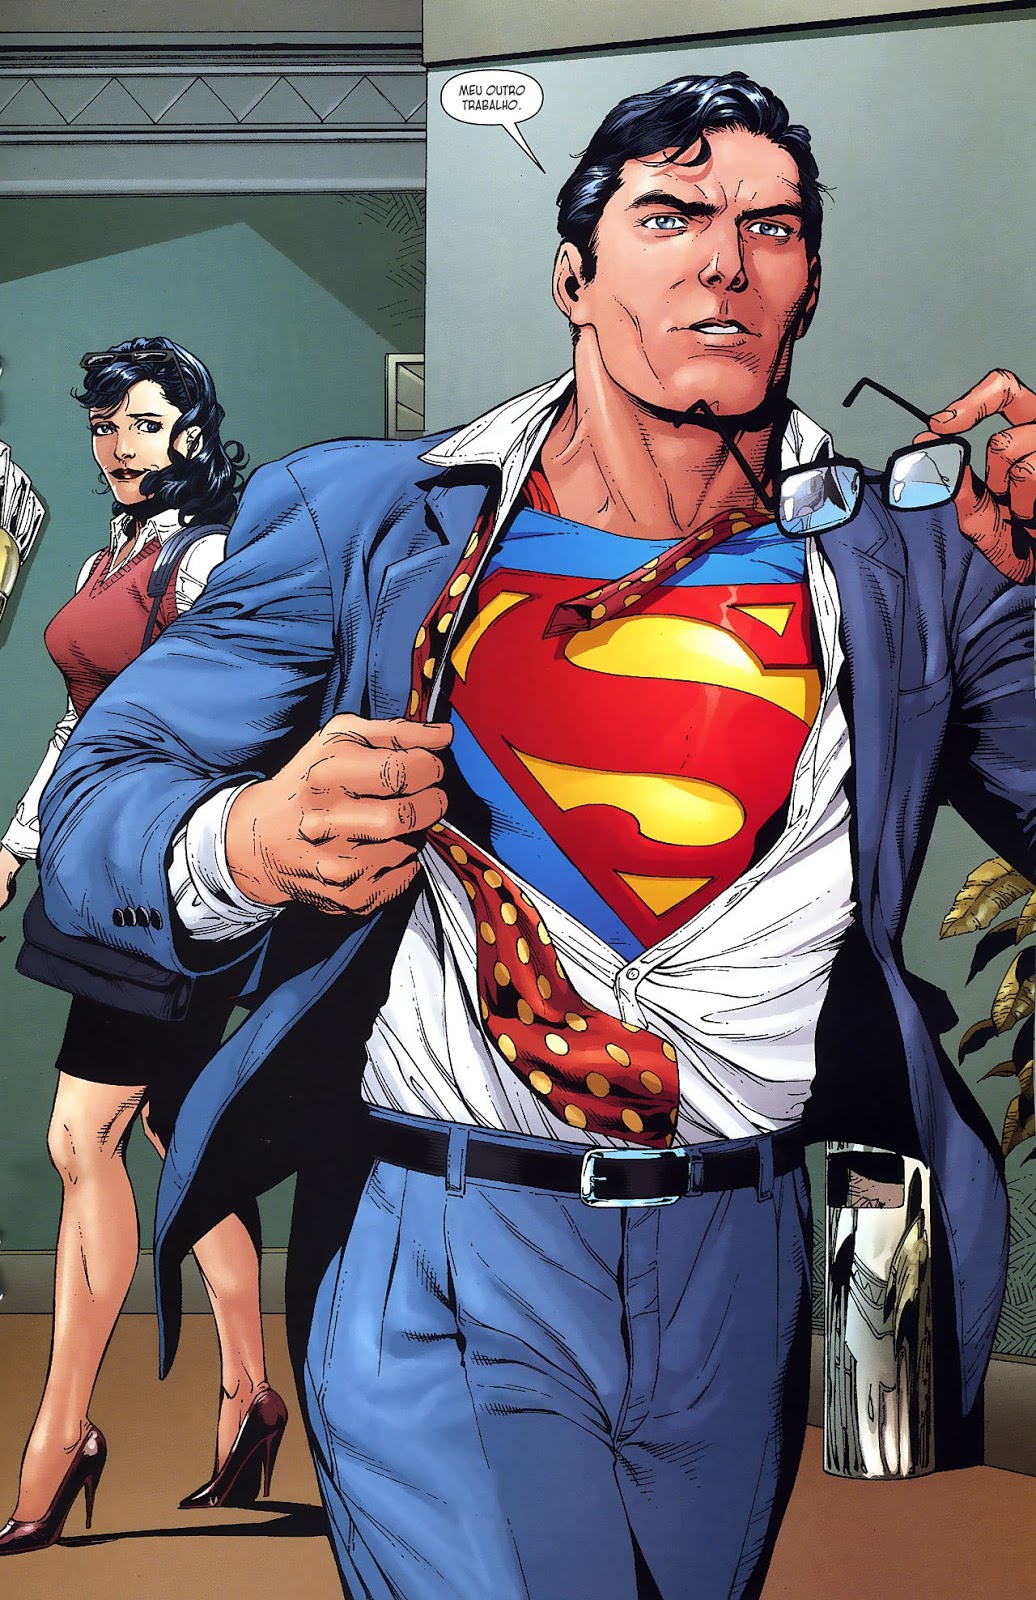 Superman de Christopher Reeve e Goonies se encontram em HQ - NerdBunker